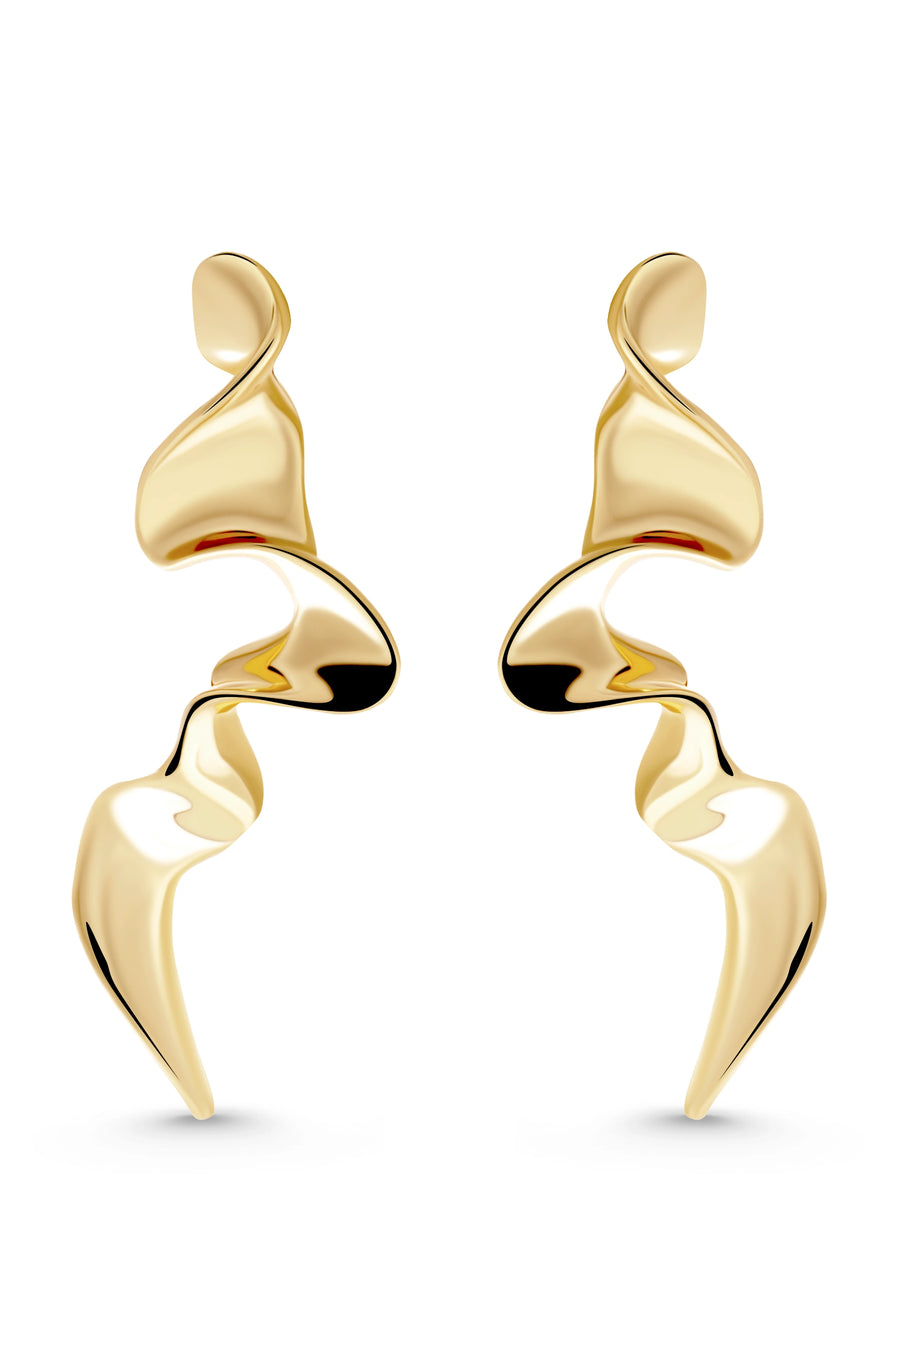 SIERRA DROPS. Drop earrings featuring a ruffled ribbon design, 18K gold vermeil, handmade, hypoallergenic, water-resistant